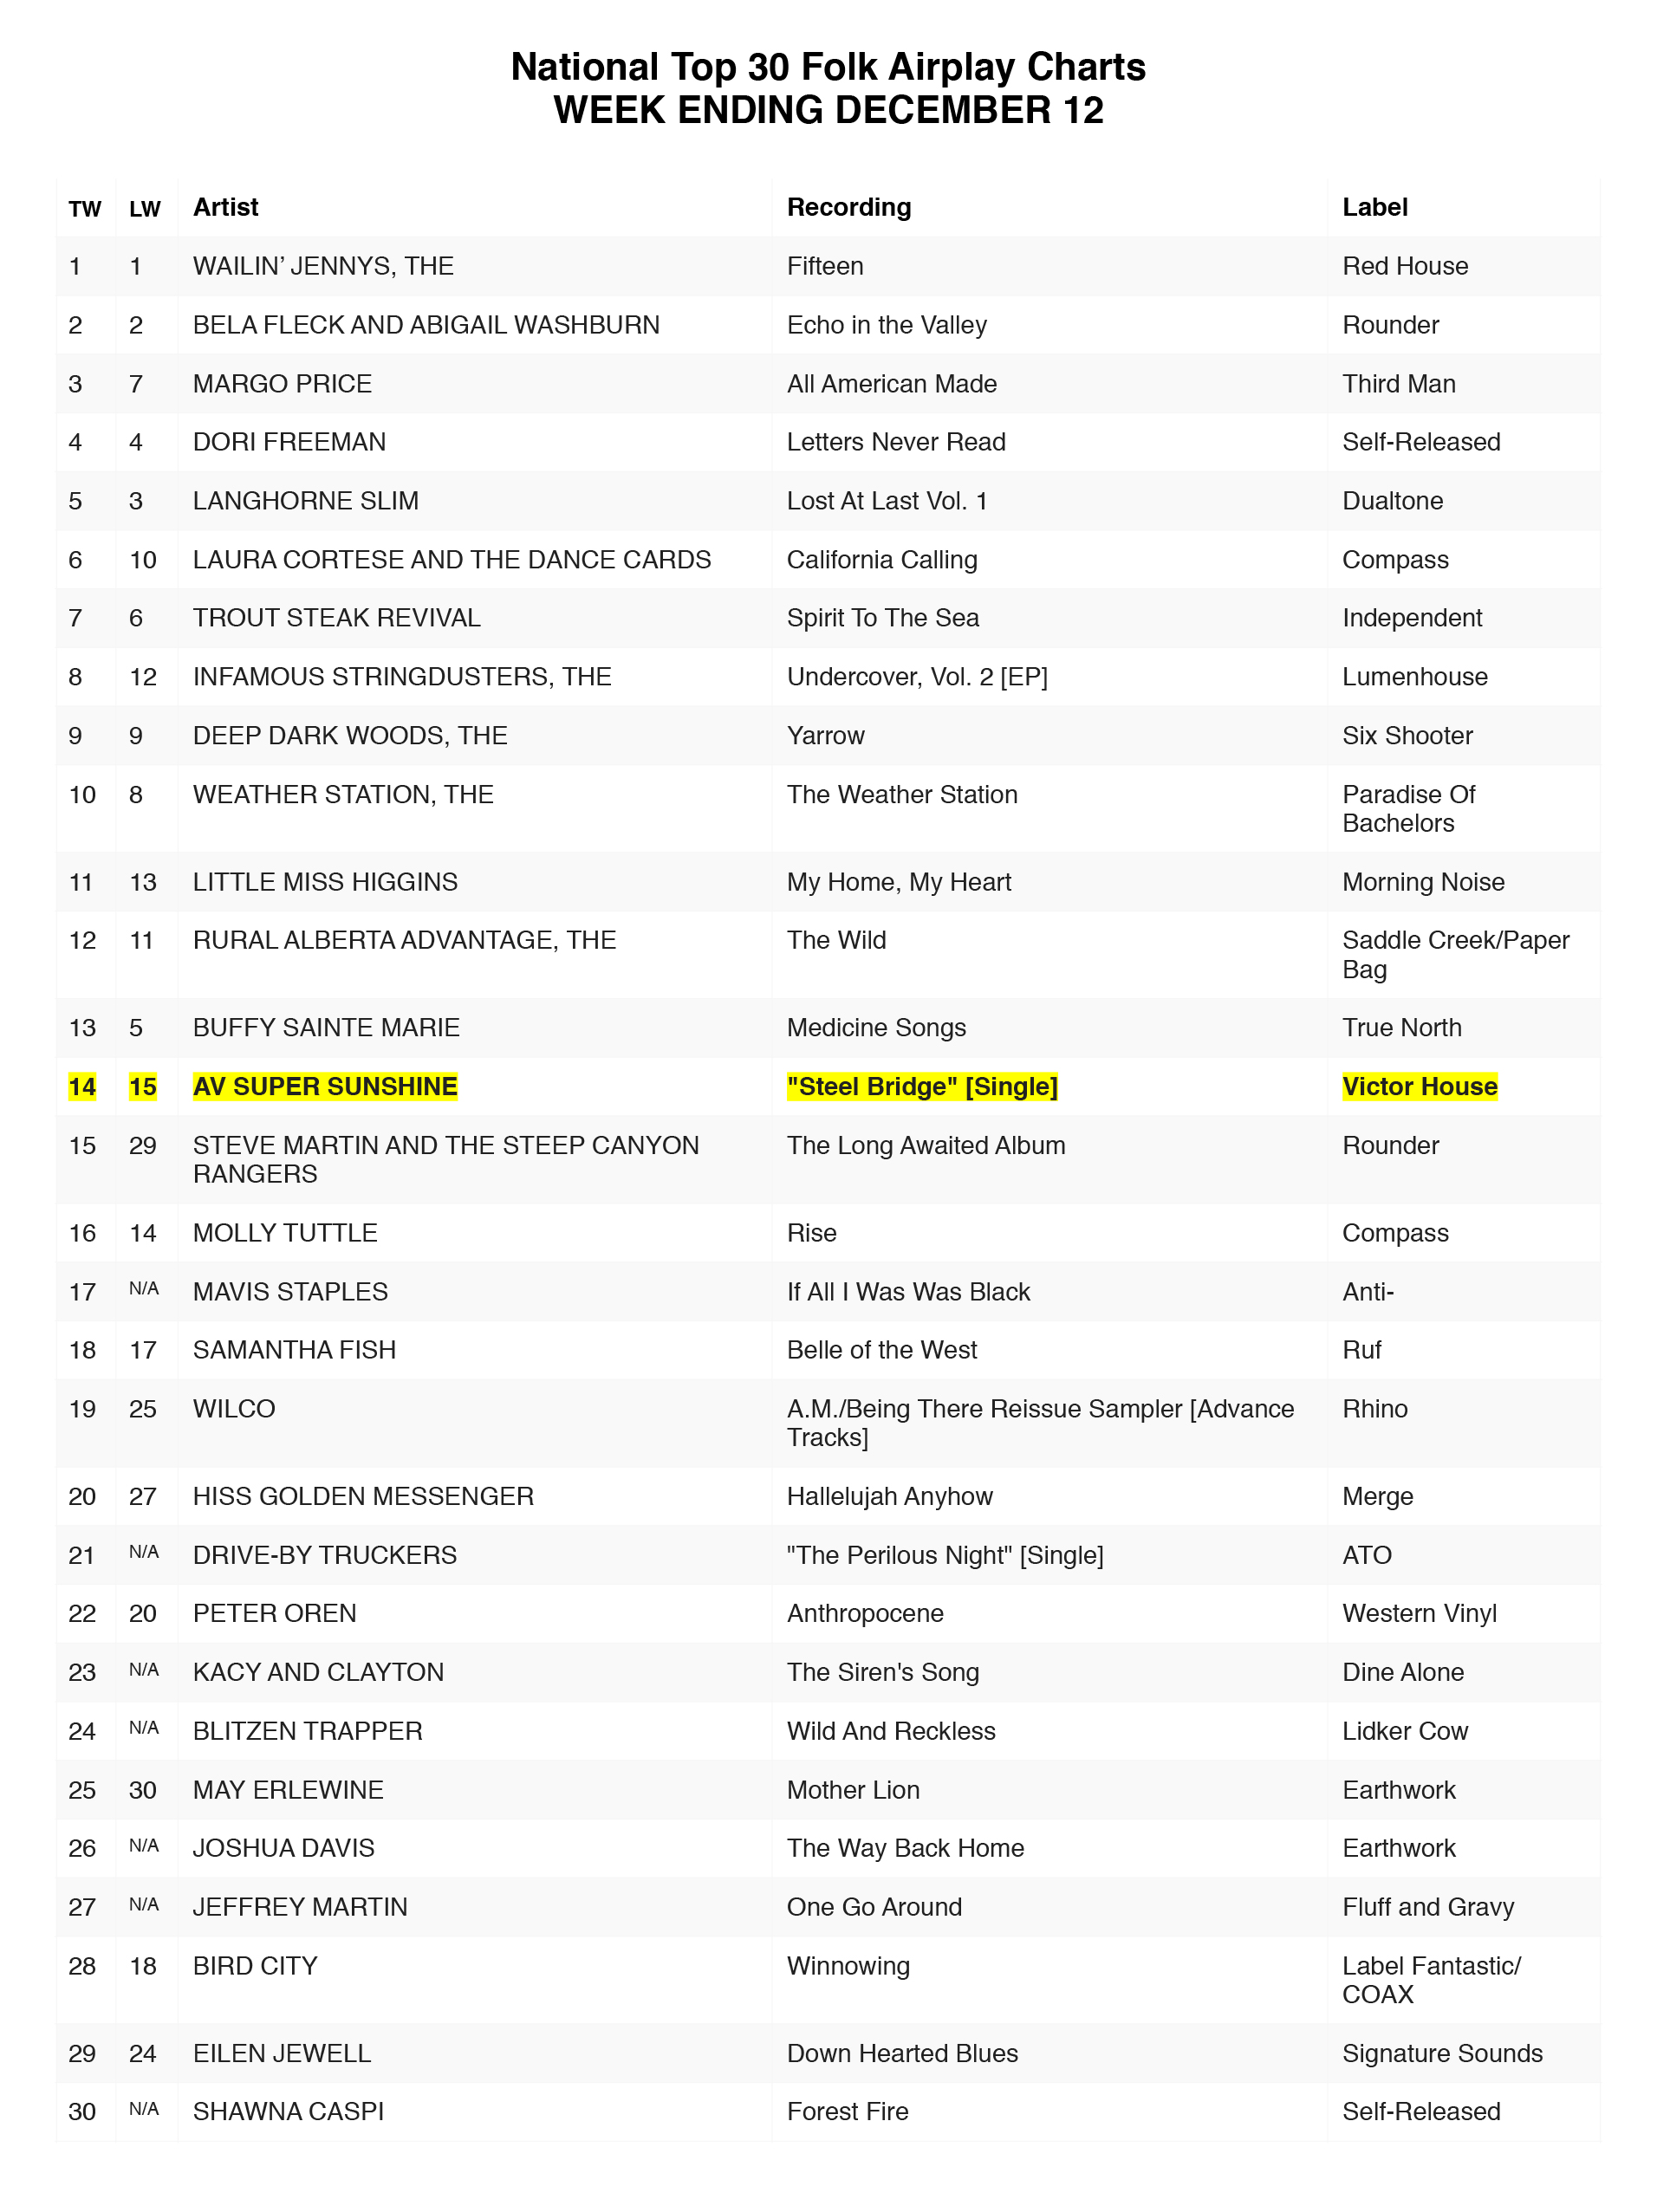 National-Top-30-Folk-Airplay-Charts121217-2